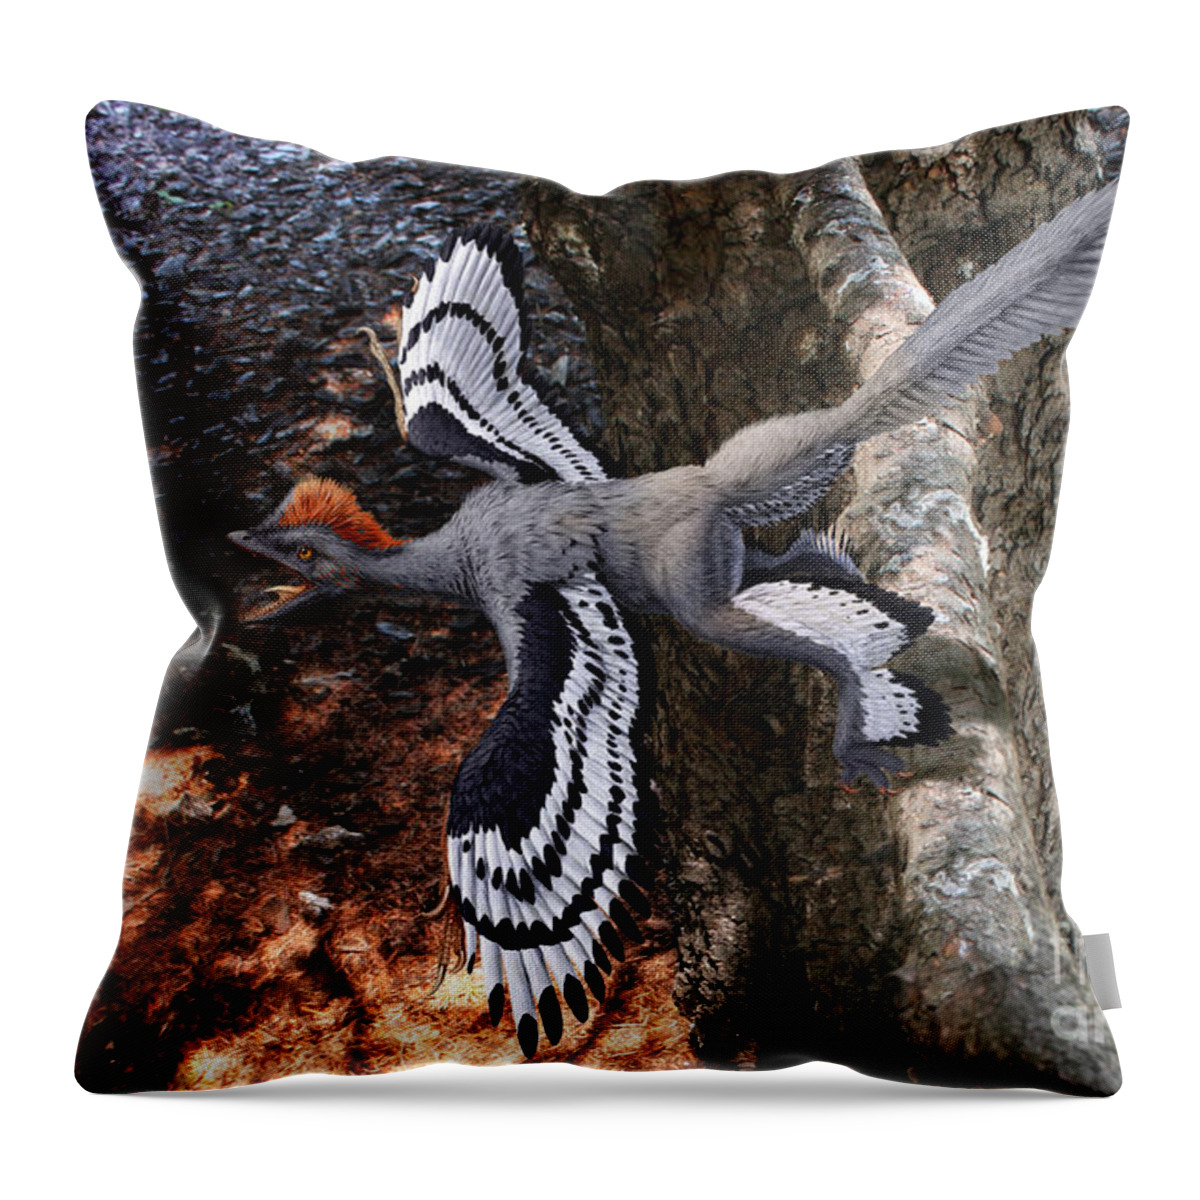 Paleoart Throw Pillow featuring the digital art Anchiornis huxleyi by Julius Csotonyi